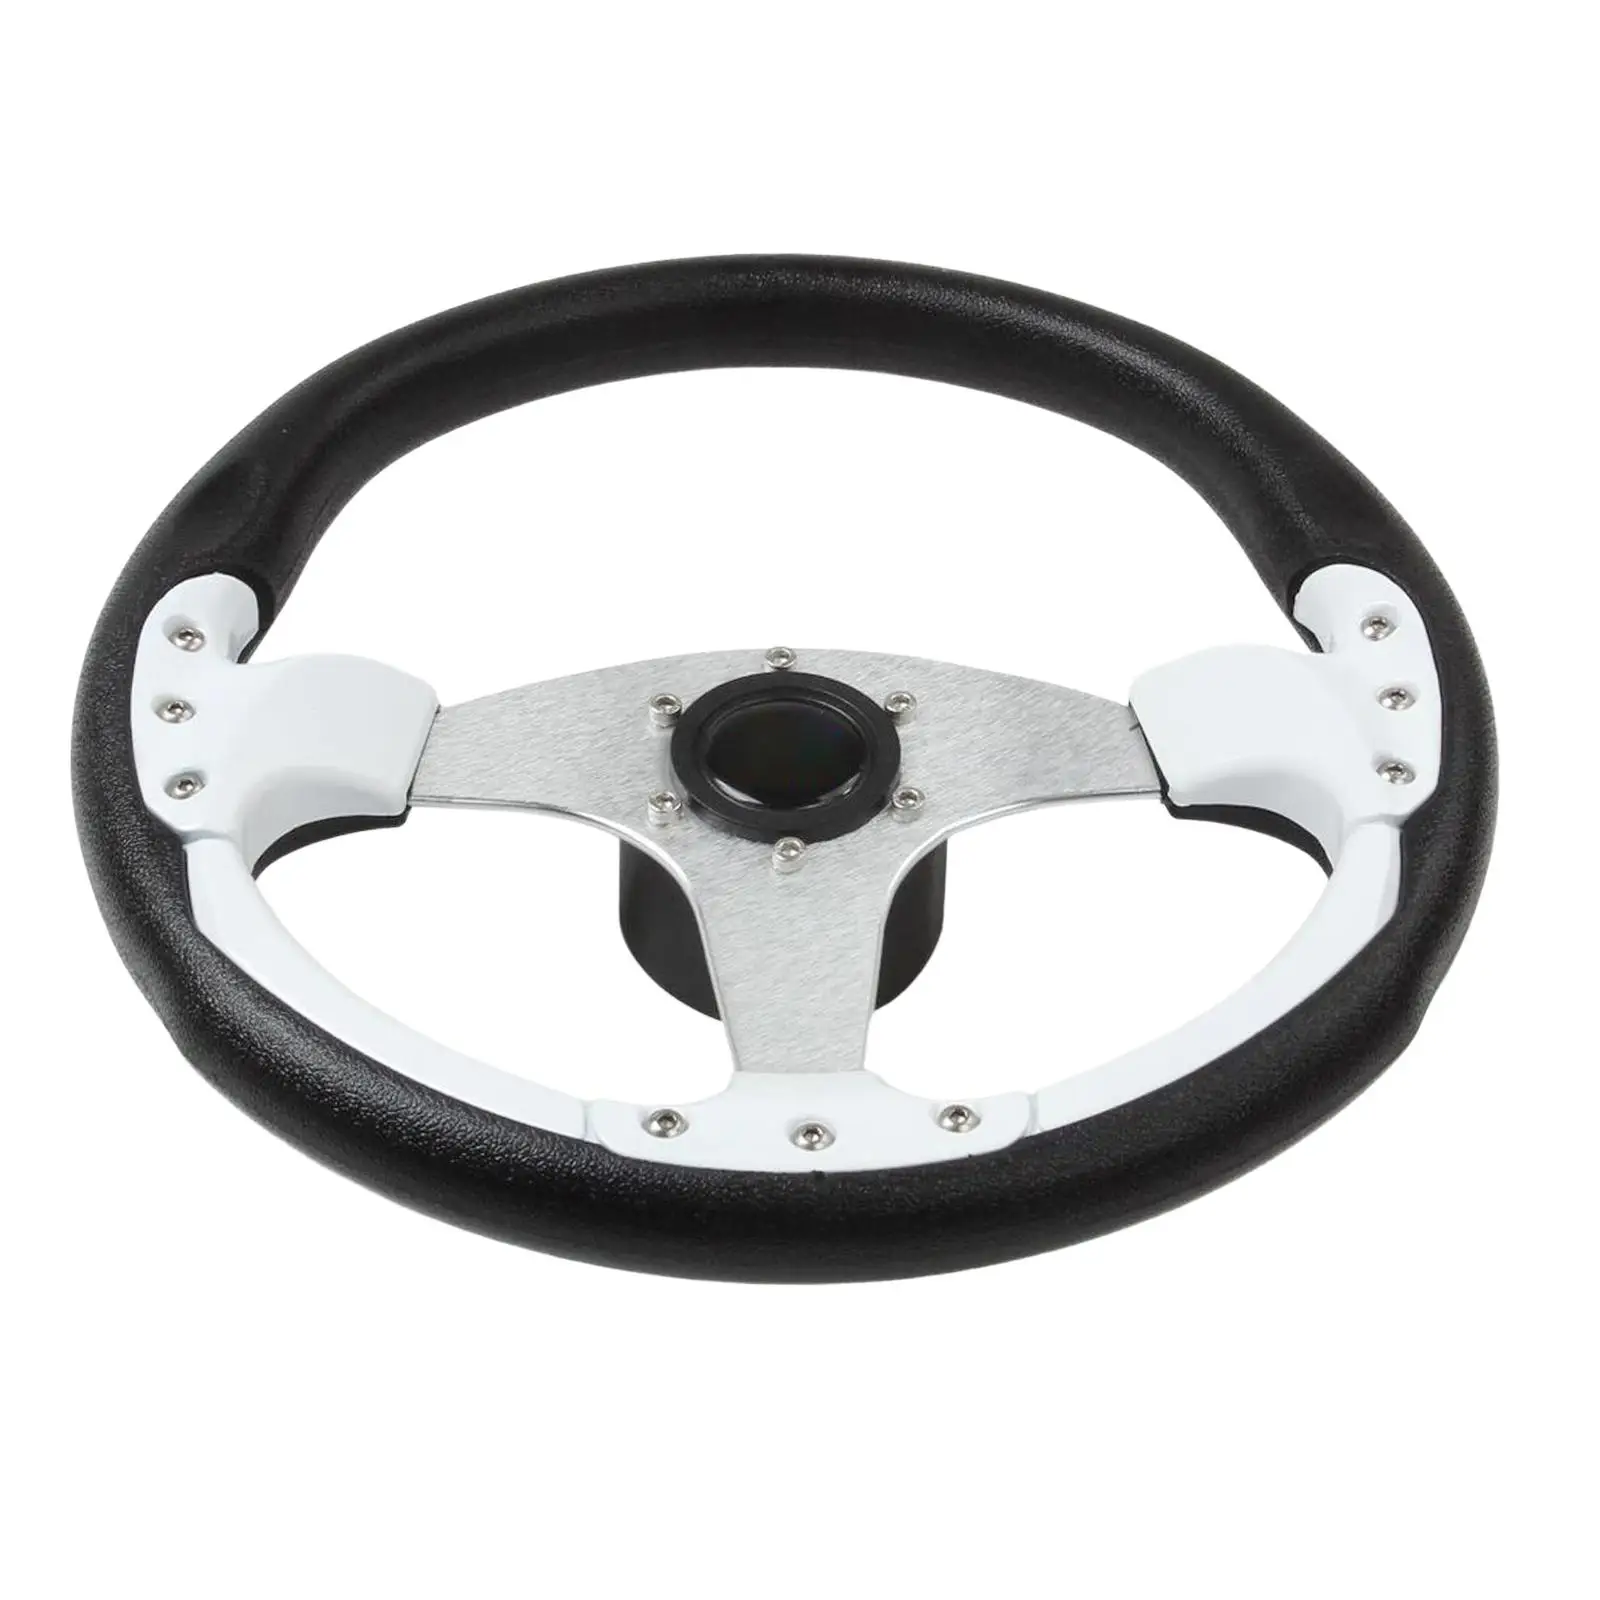 3 Spokes 13.8 inch Boat Steering Wheel Ergonomic Design Aluminum Frame Replace